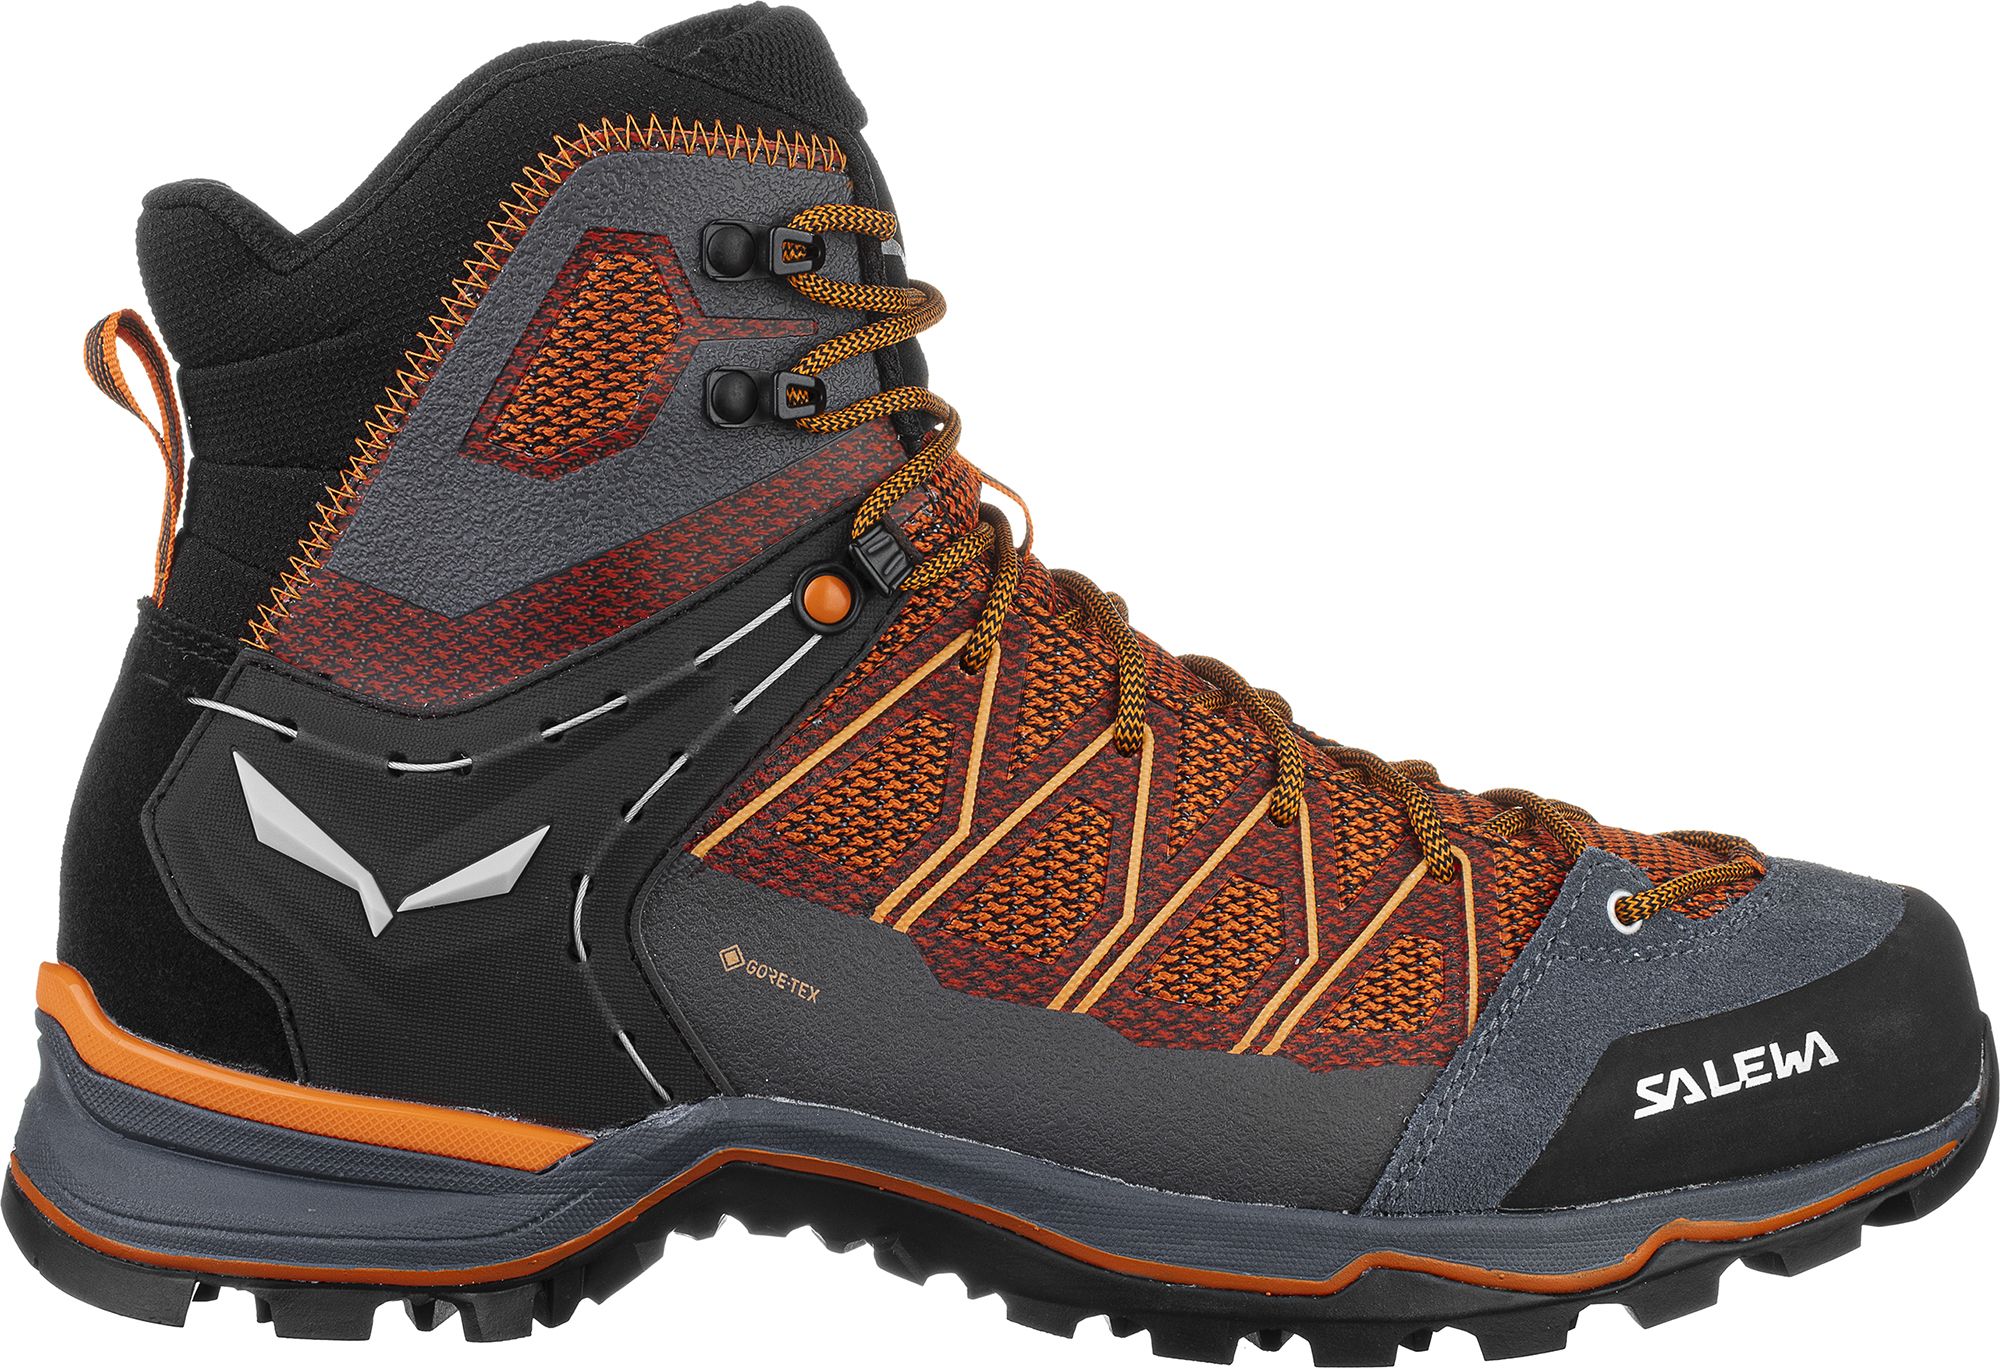 Photos - Trekking Shoes Salewa Men's Mountain Trainer Lite Mid GORE-TEX Hiking Boots, Size 12, Bla 